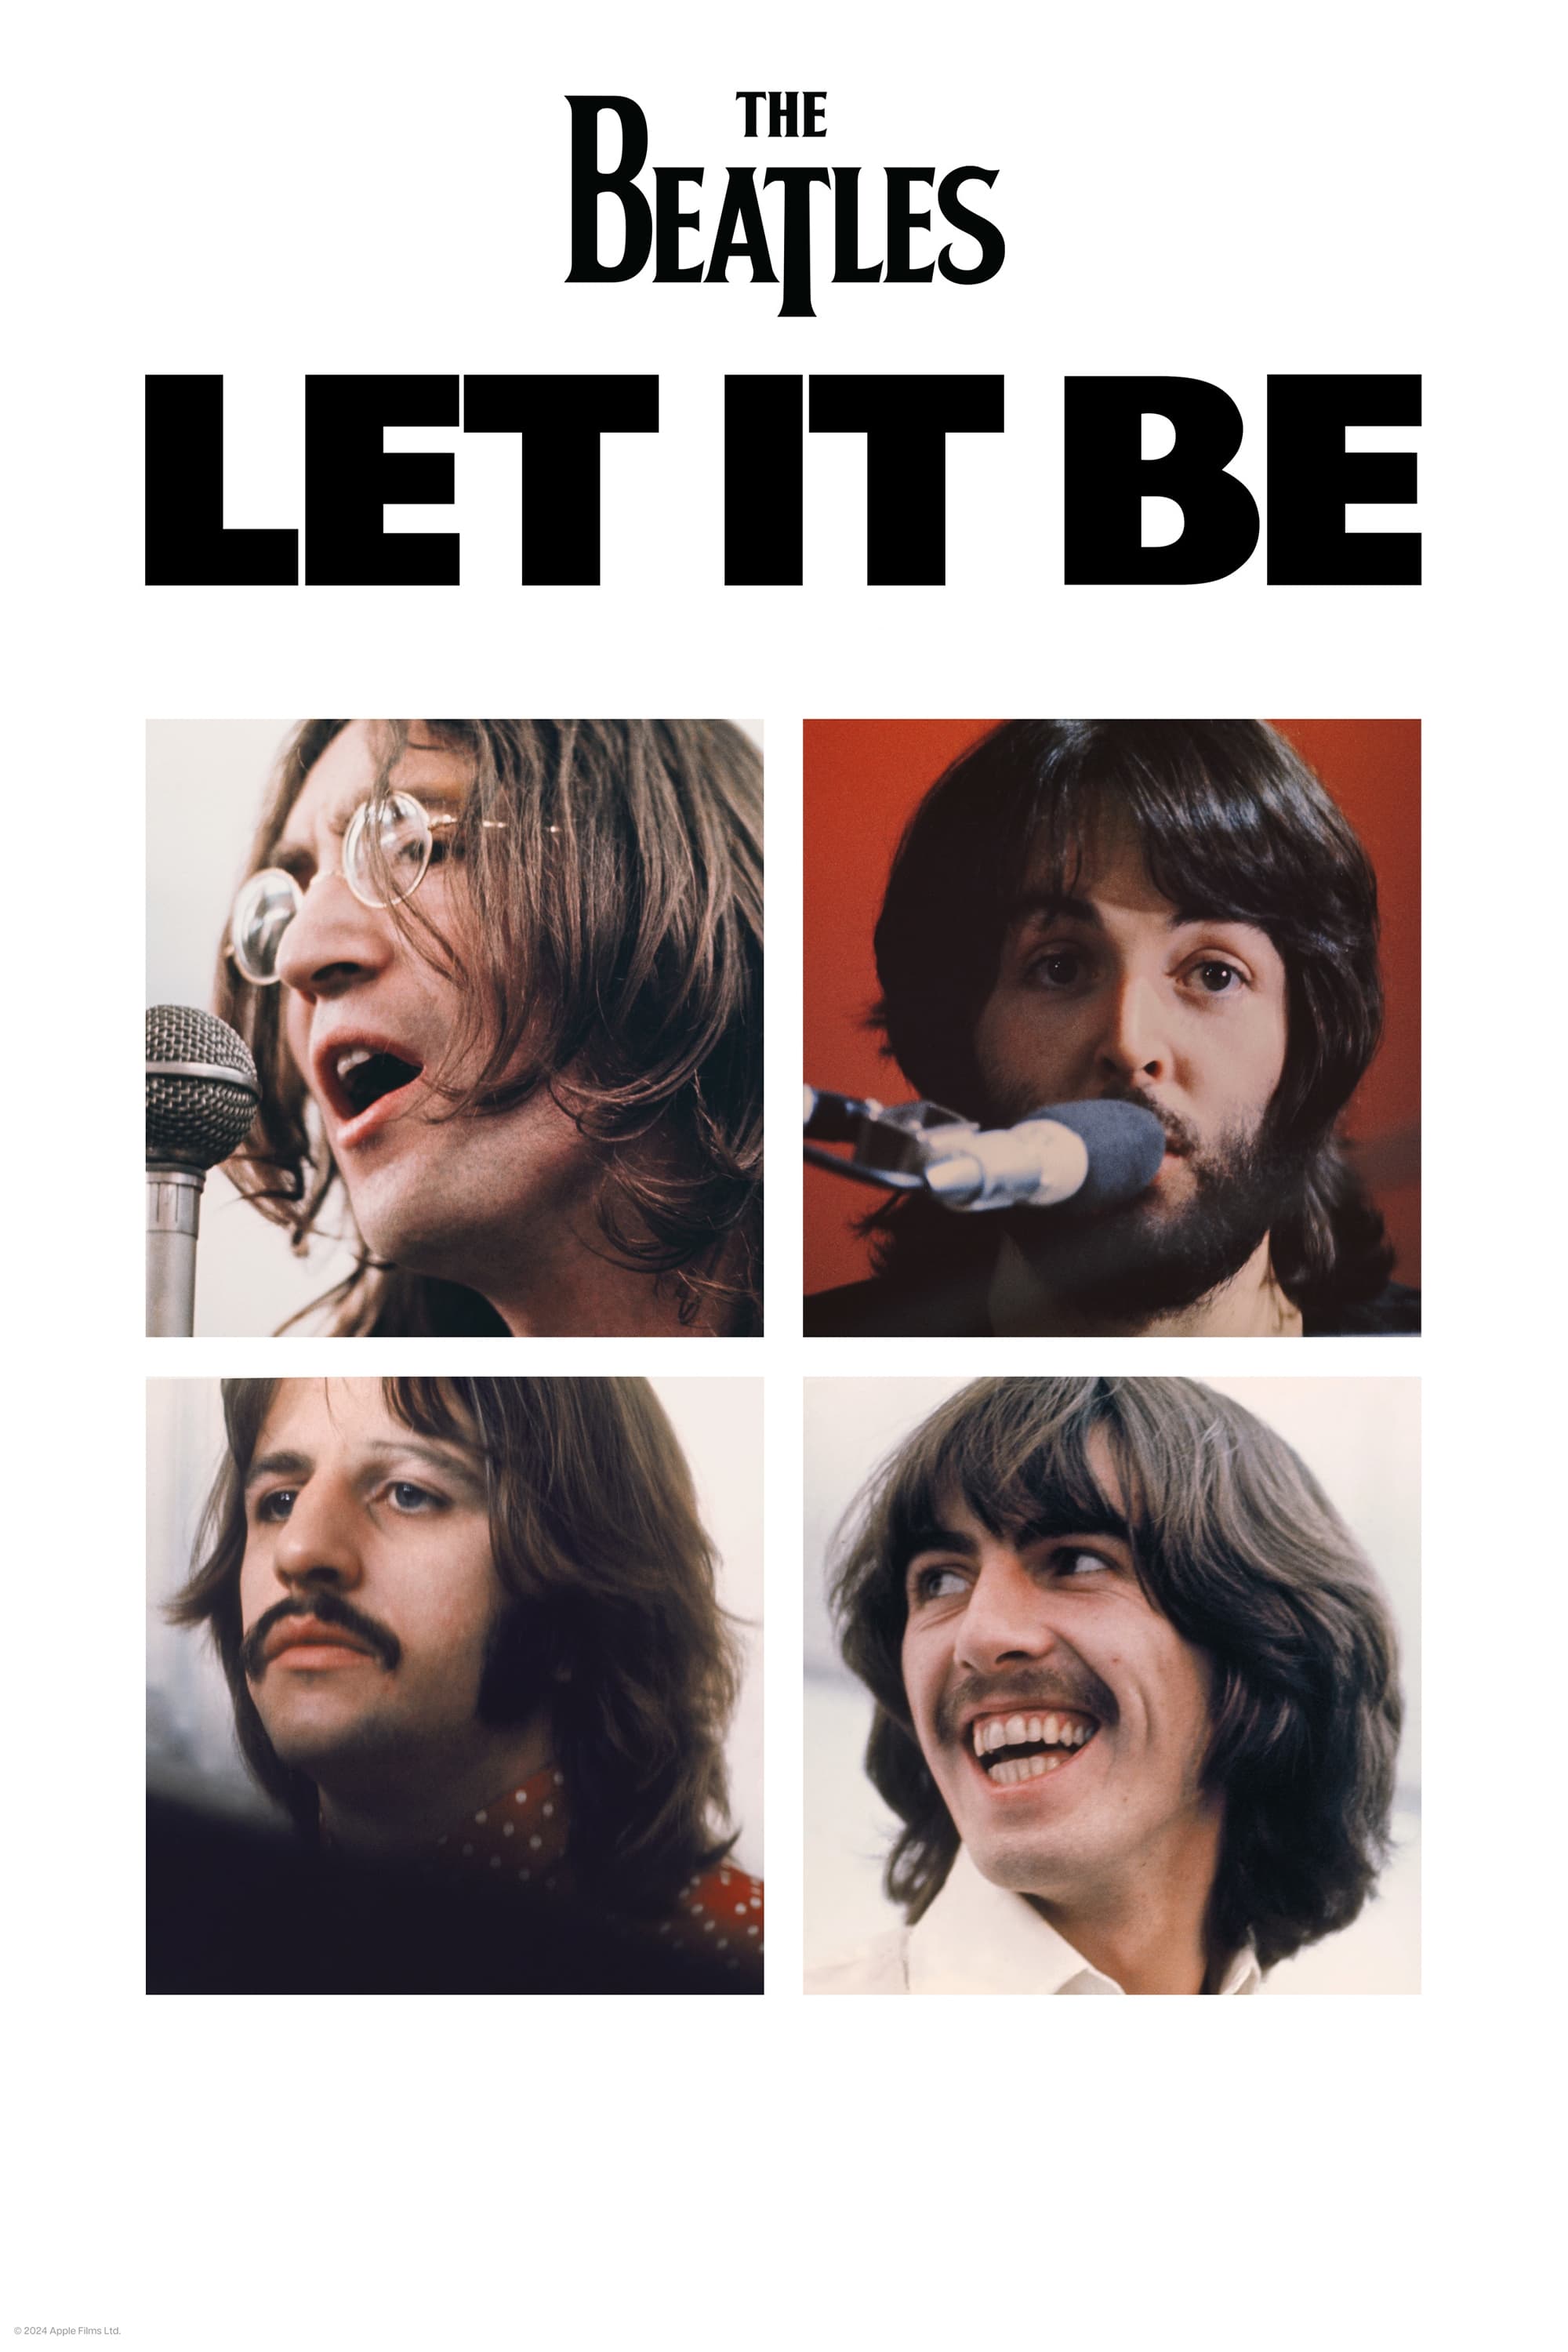 Let It Be